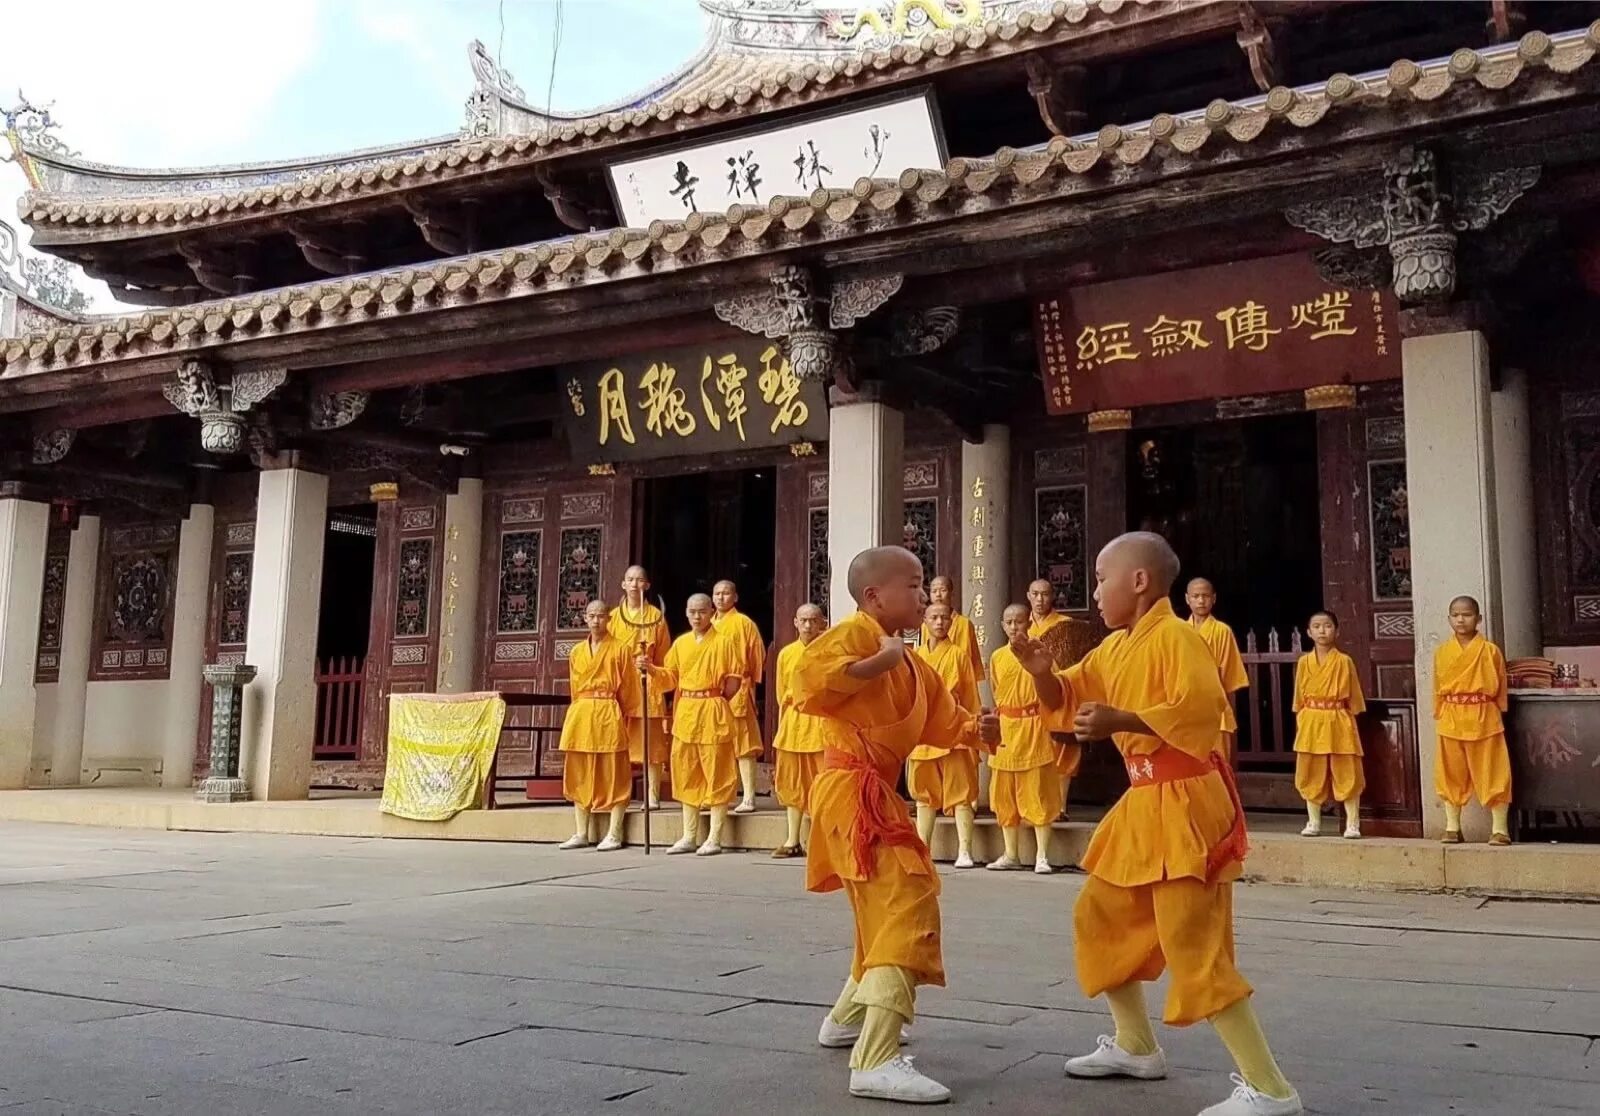 Shaolin temple. Кунг-фу монастырь Шаолинь. Китайский монастырь Шаолинь. Буддийский храм Шаолинь. Шаолинь Хэнань.